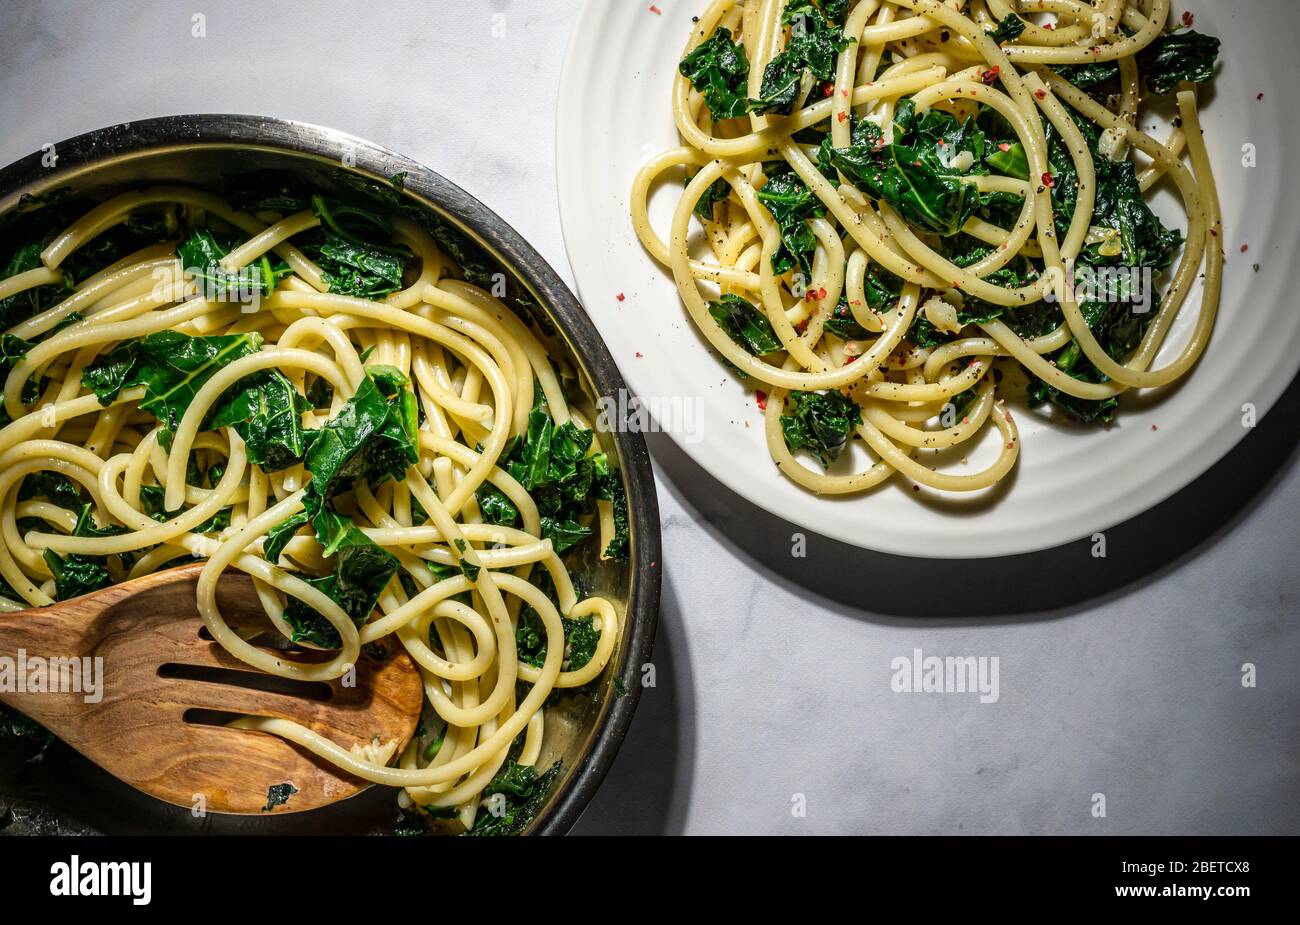 Vegan pasta dish. Bucatini sauteed kale and garlic with nutritional yeast. Stock Photo